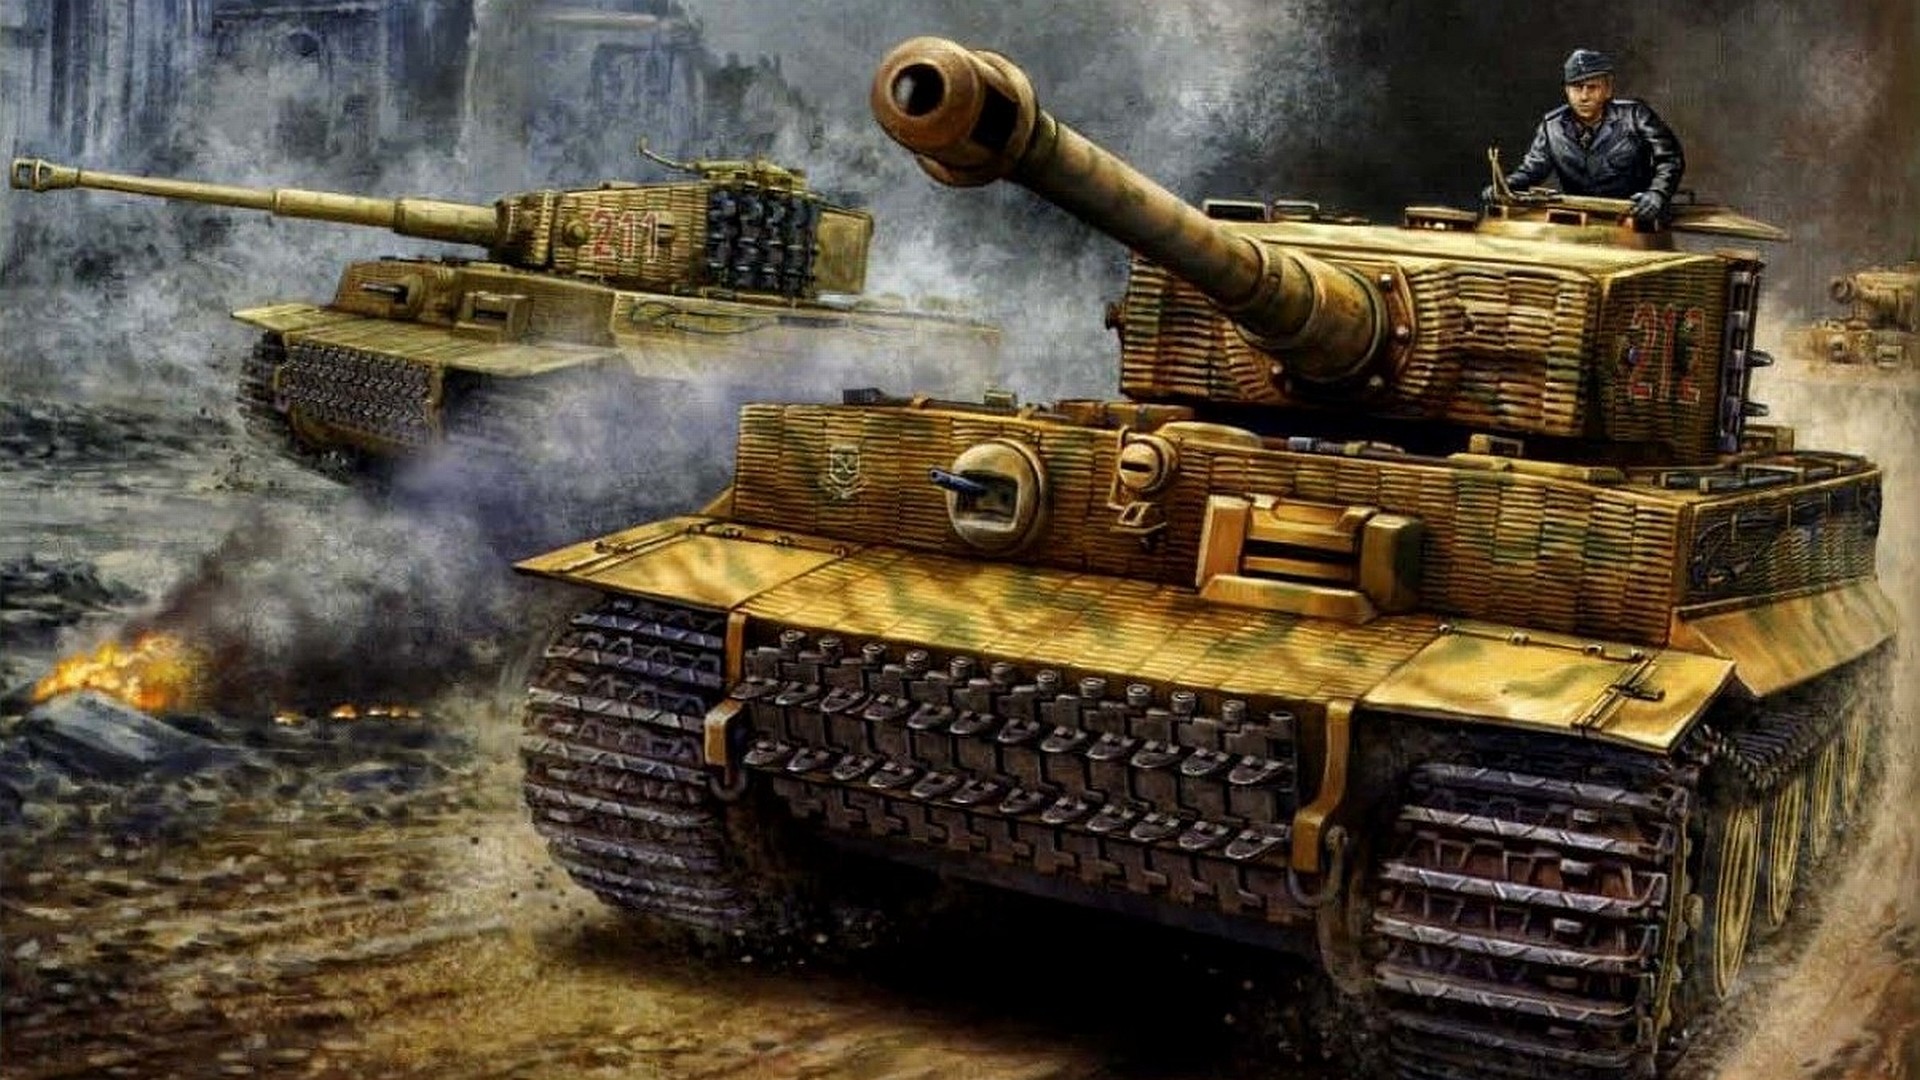 King Tiger Tank Wallpaper (74+ images)